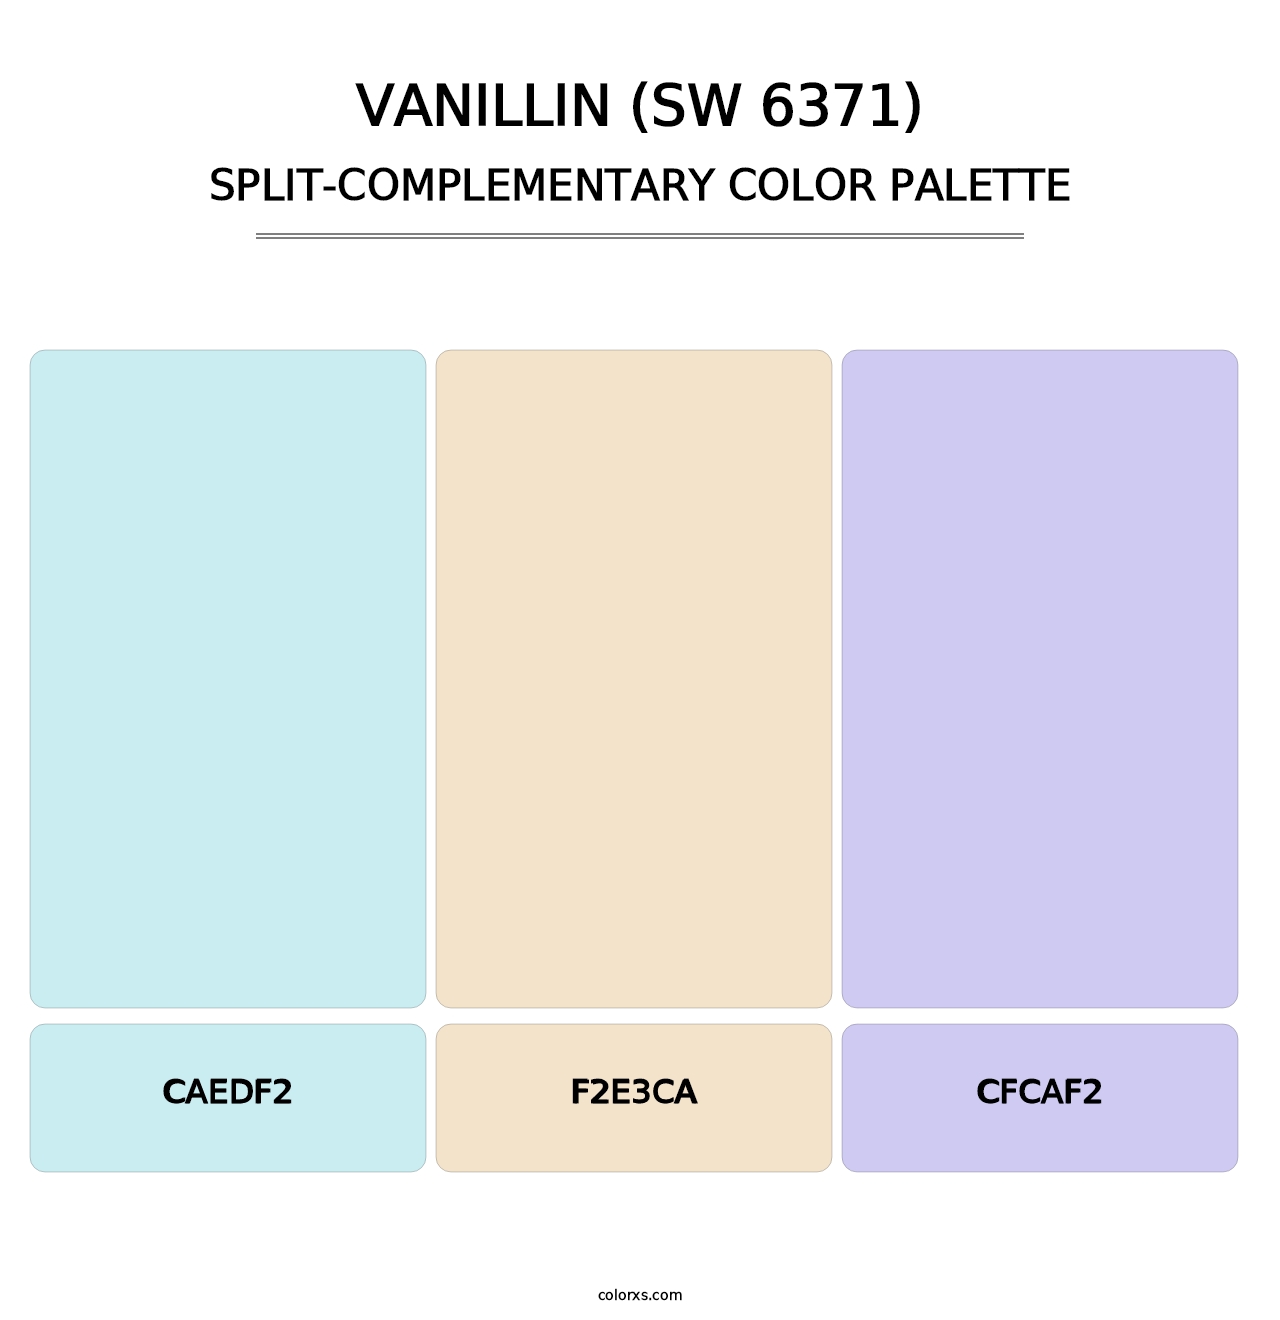 Vanillin (SW 6371) - Split-Complementary Color Palette